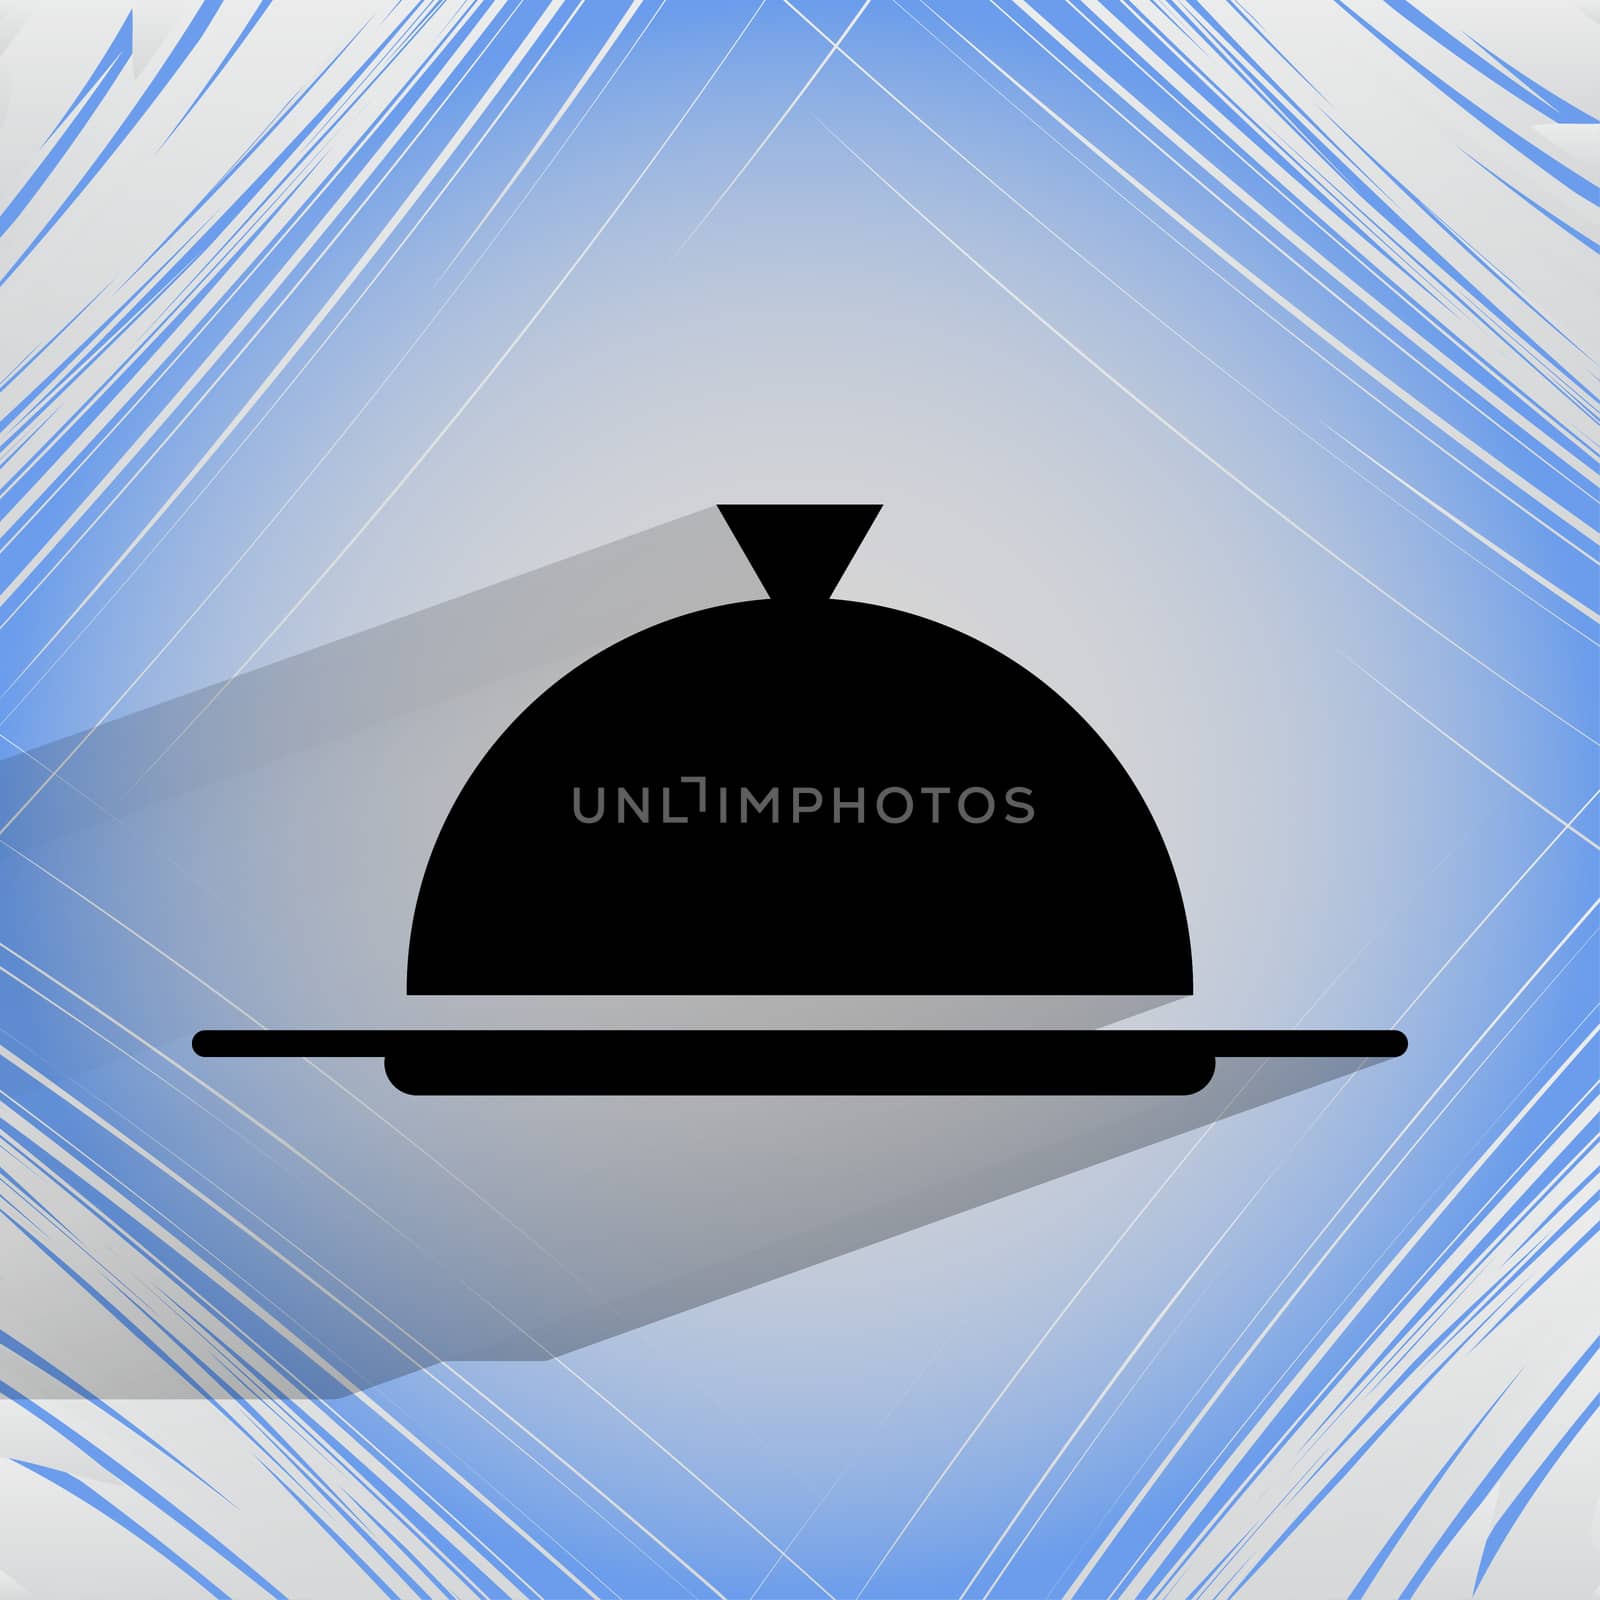 Restaurant cloche. Flat modern web button on a flat geometric abstract background  . 